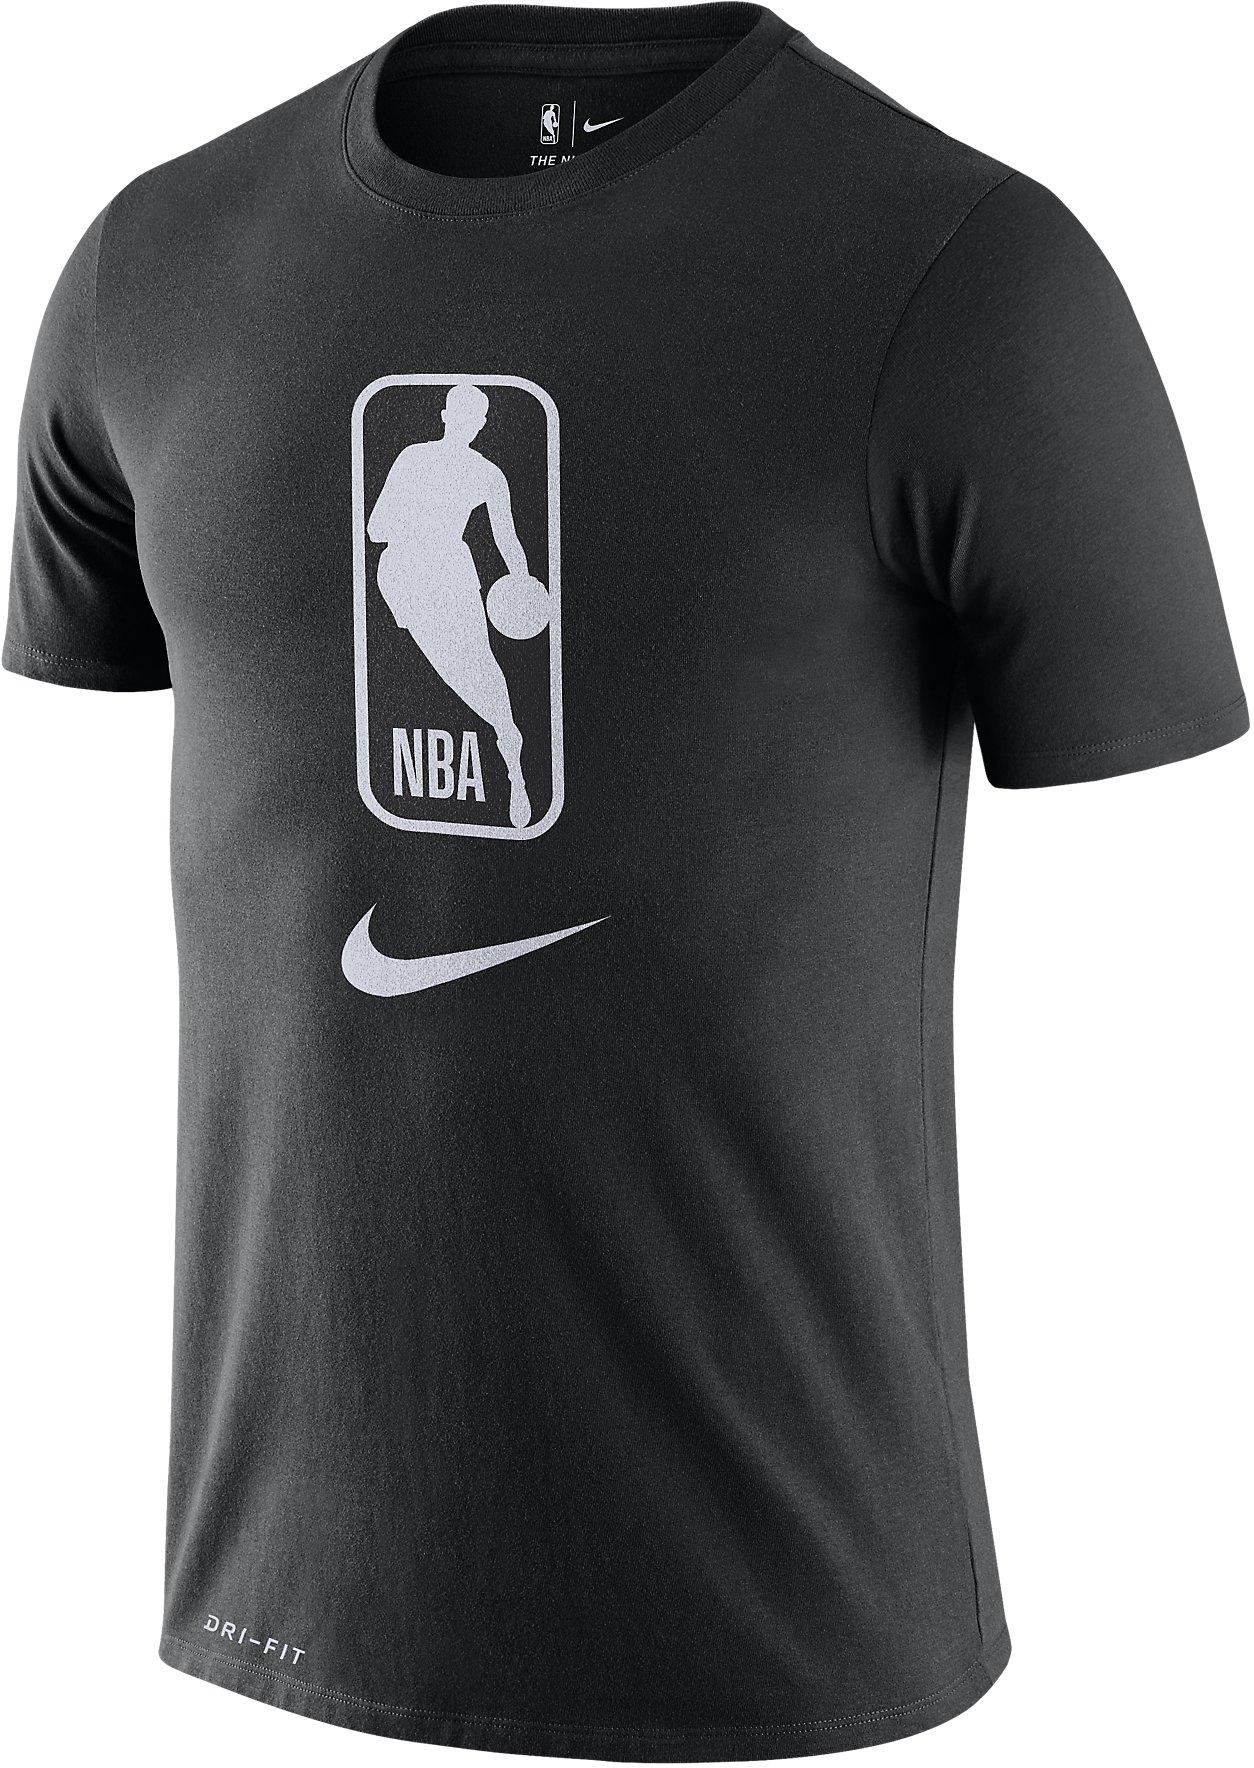 Pánské tričko s krátkým rukávem Nike NBA Dri-FIT Team 31